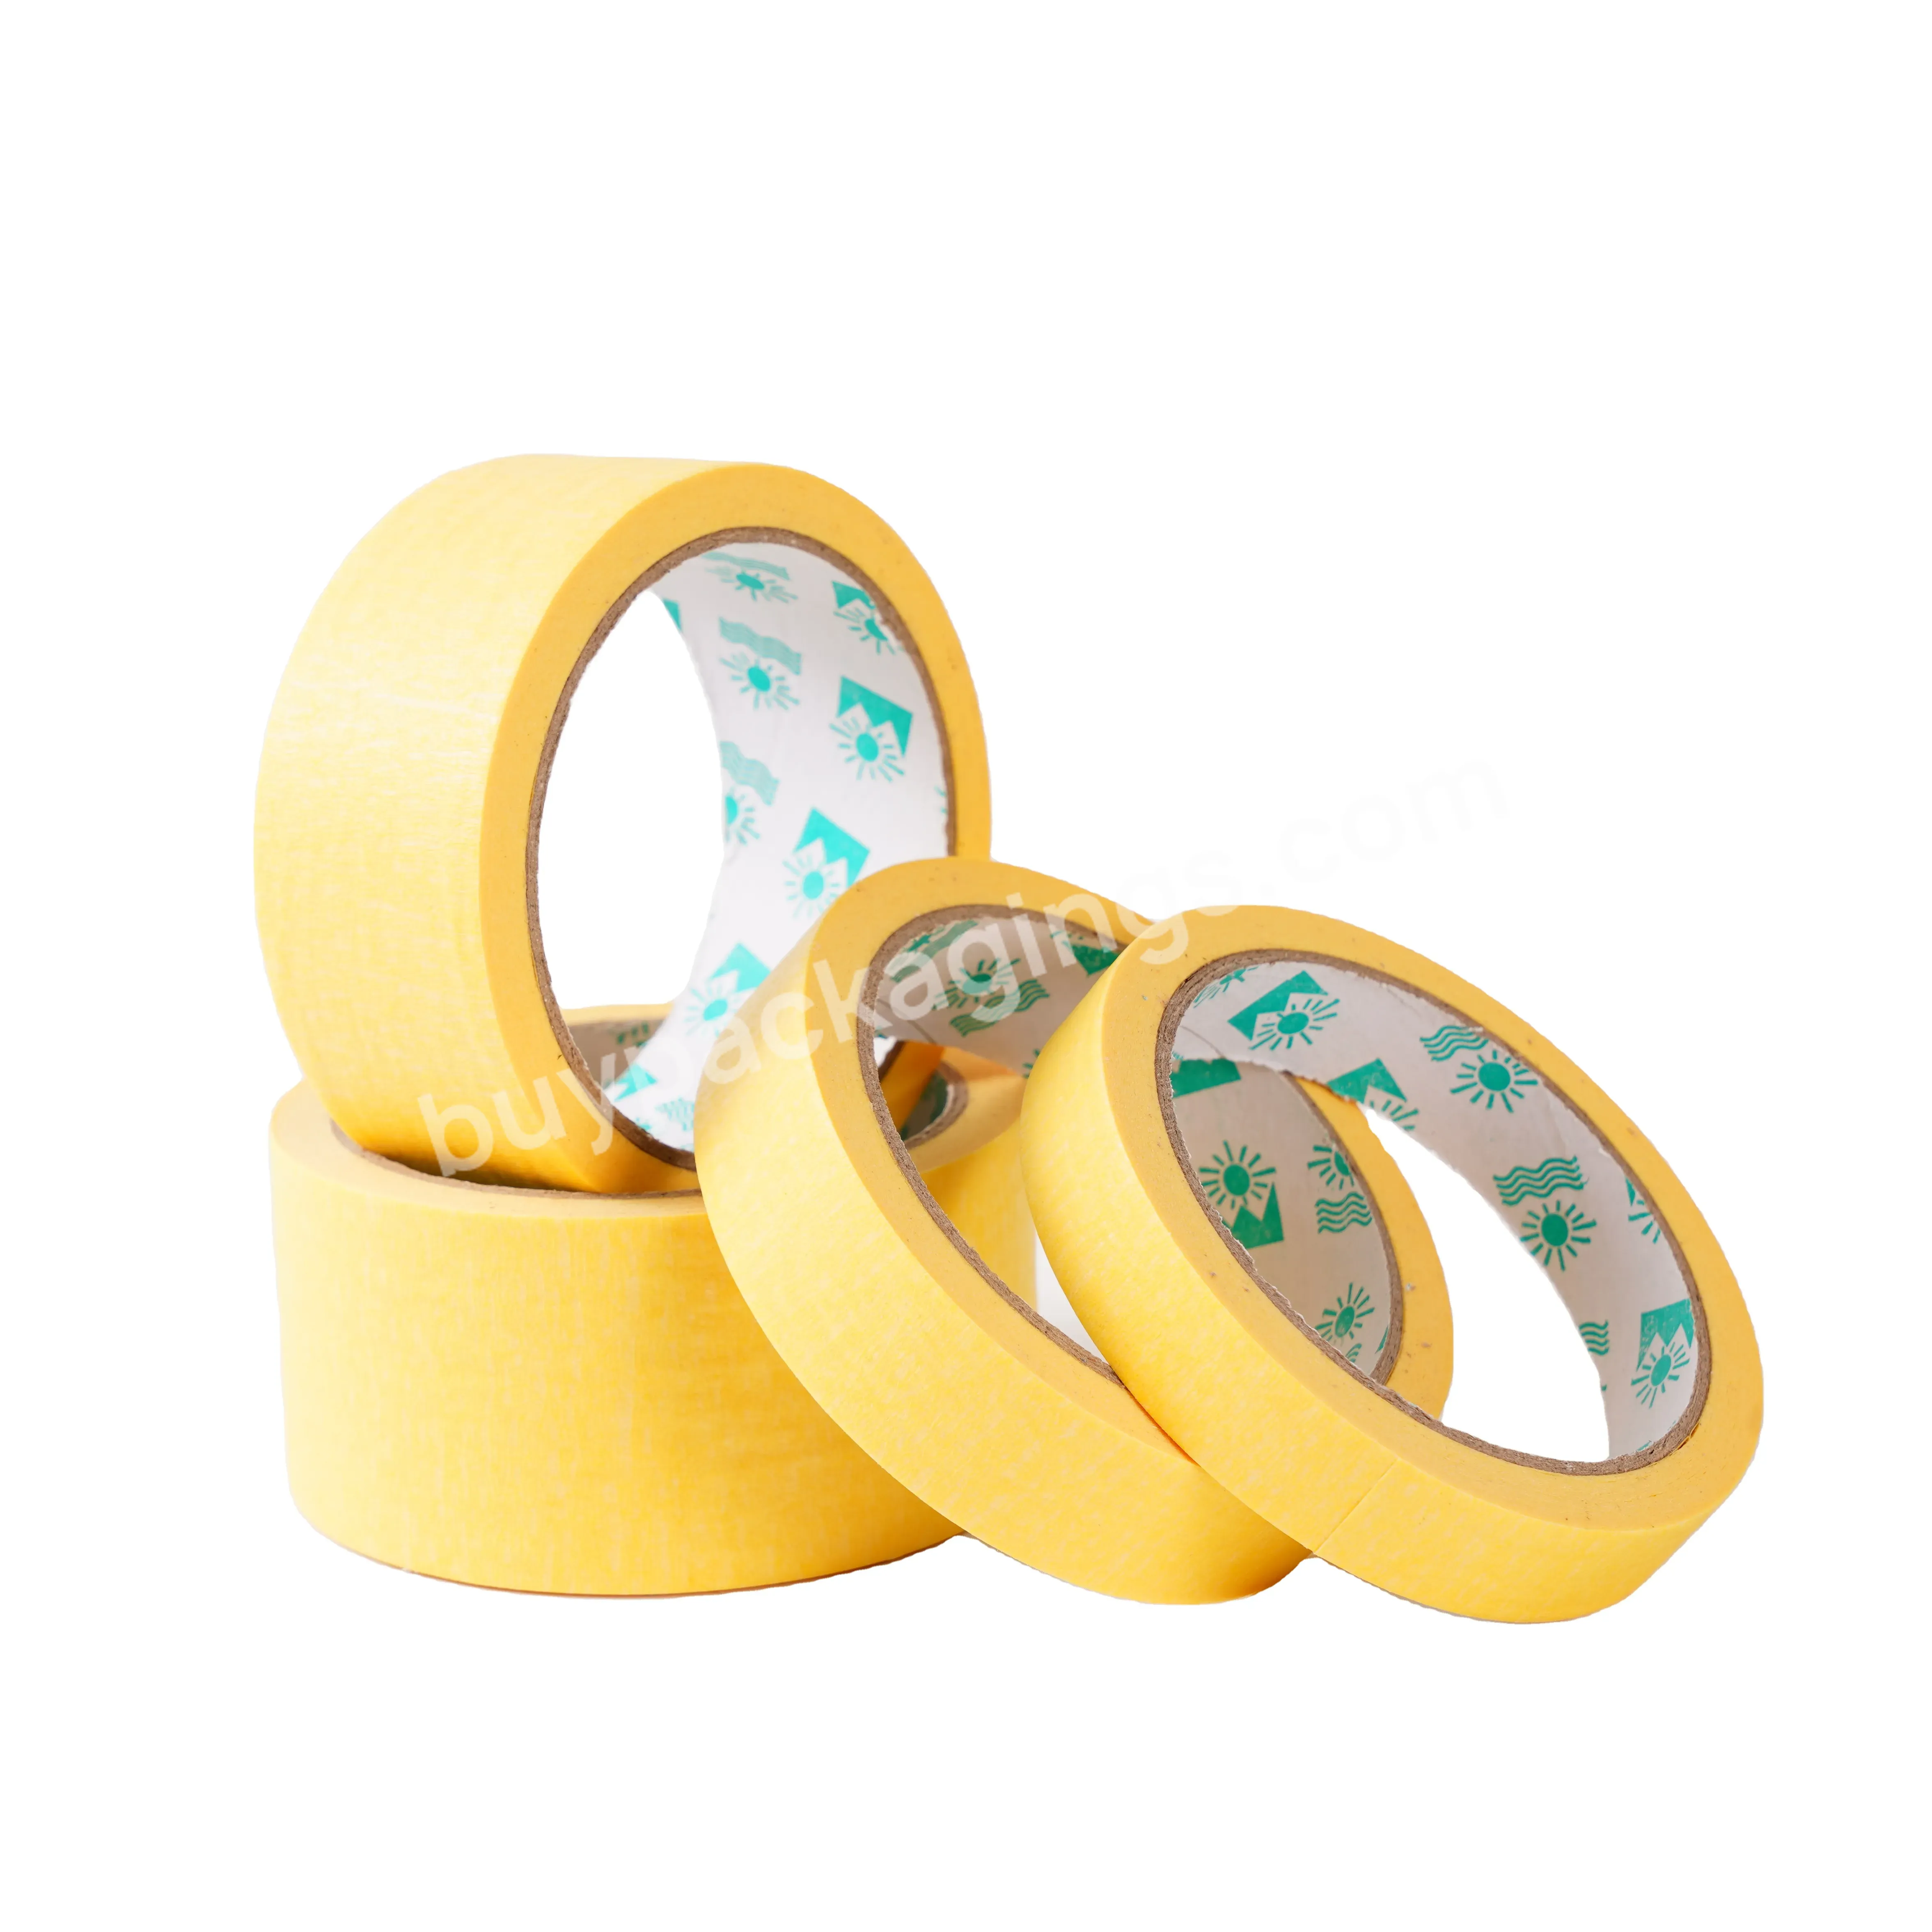 3m Masking Tape Promotional Masking Tape For Painting Yellow Crepe Paper Masking Tape - Buy 3m Masking Tape,Promotional Masking Tape For Painting,Masking Tape 3m Blue Masking Tape.